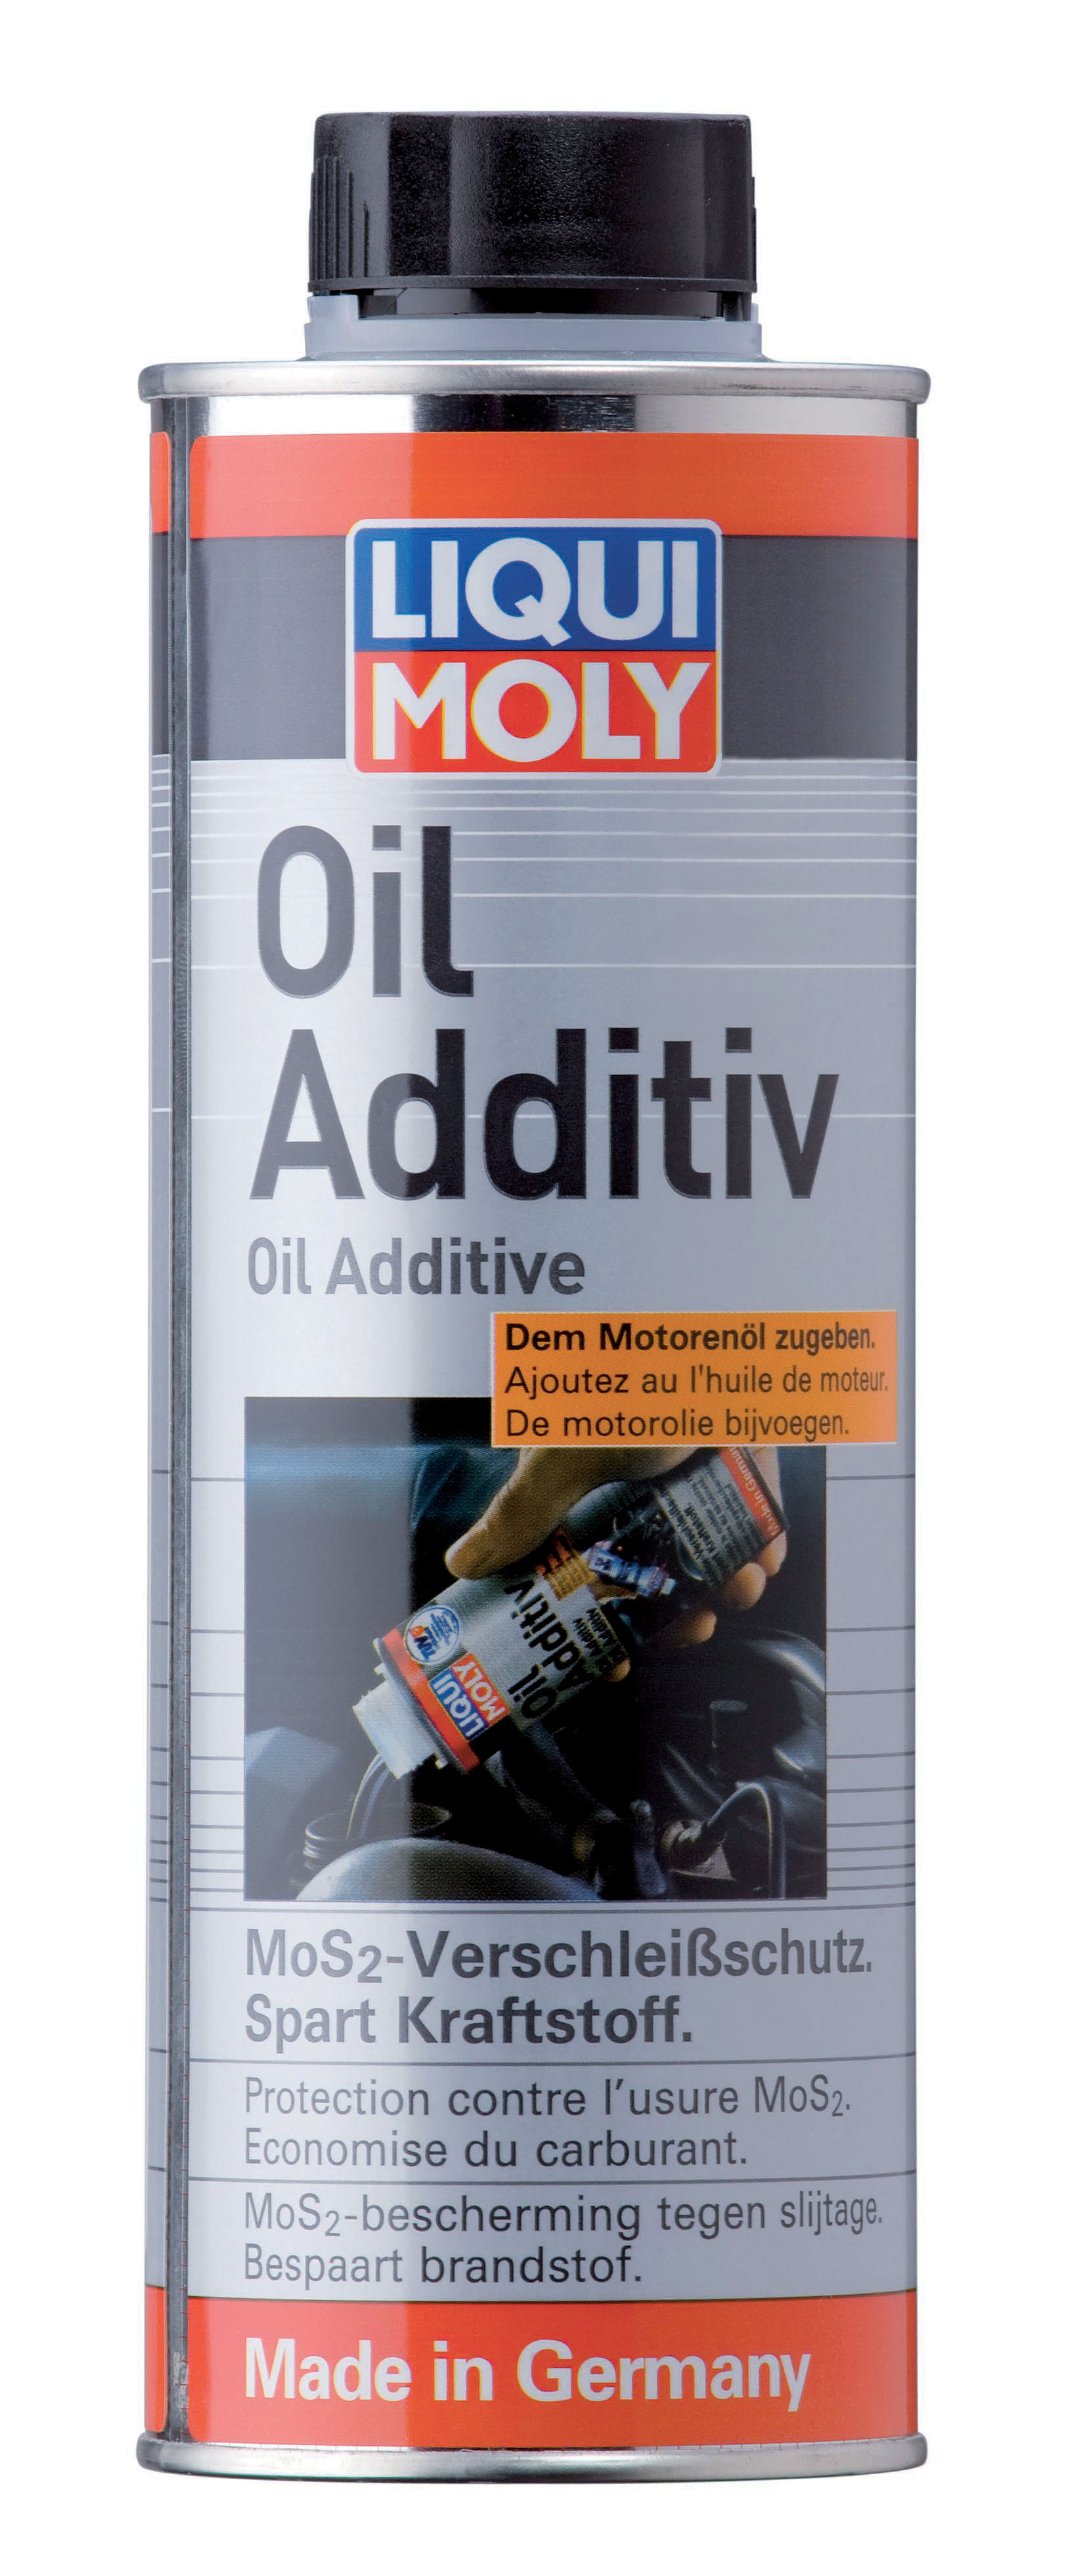 LIQUI MOLY Oil Additiv | 500 ml | Öladditiv | Art.-Nr.: 1013 von Liqui Moly